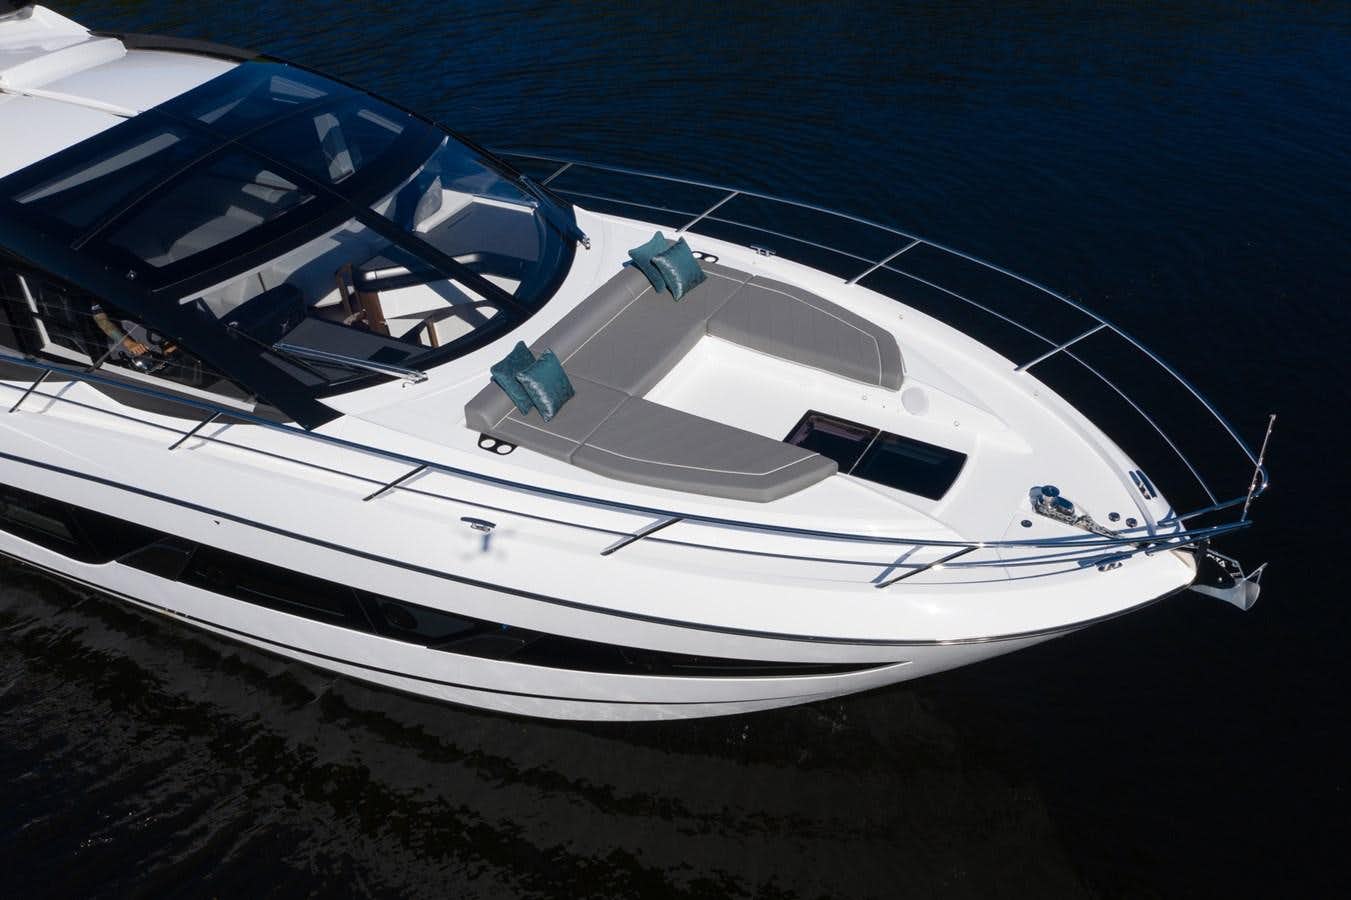 Sunseeker 55 predator
Yacht for Sale